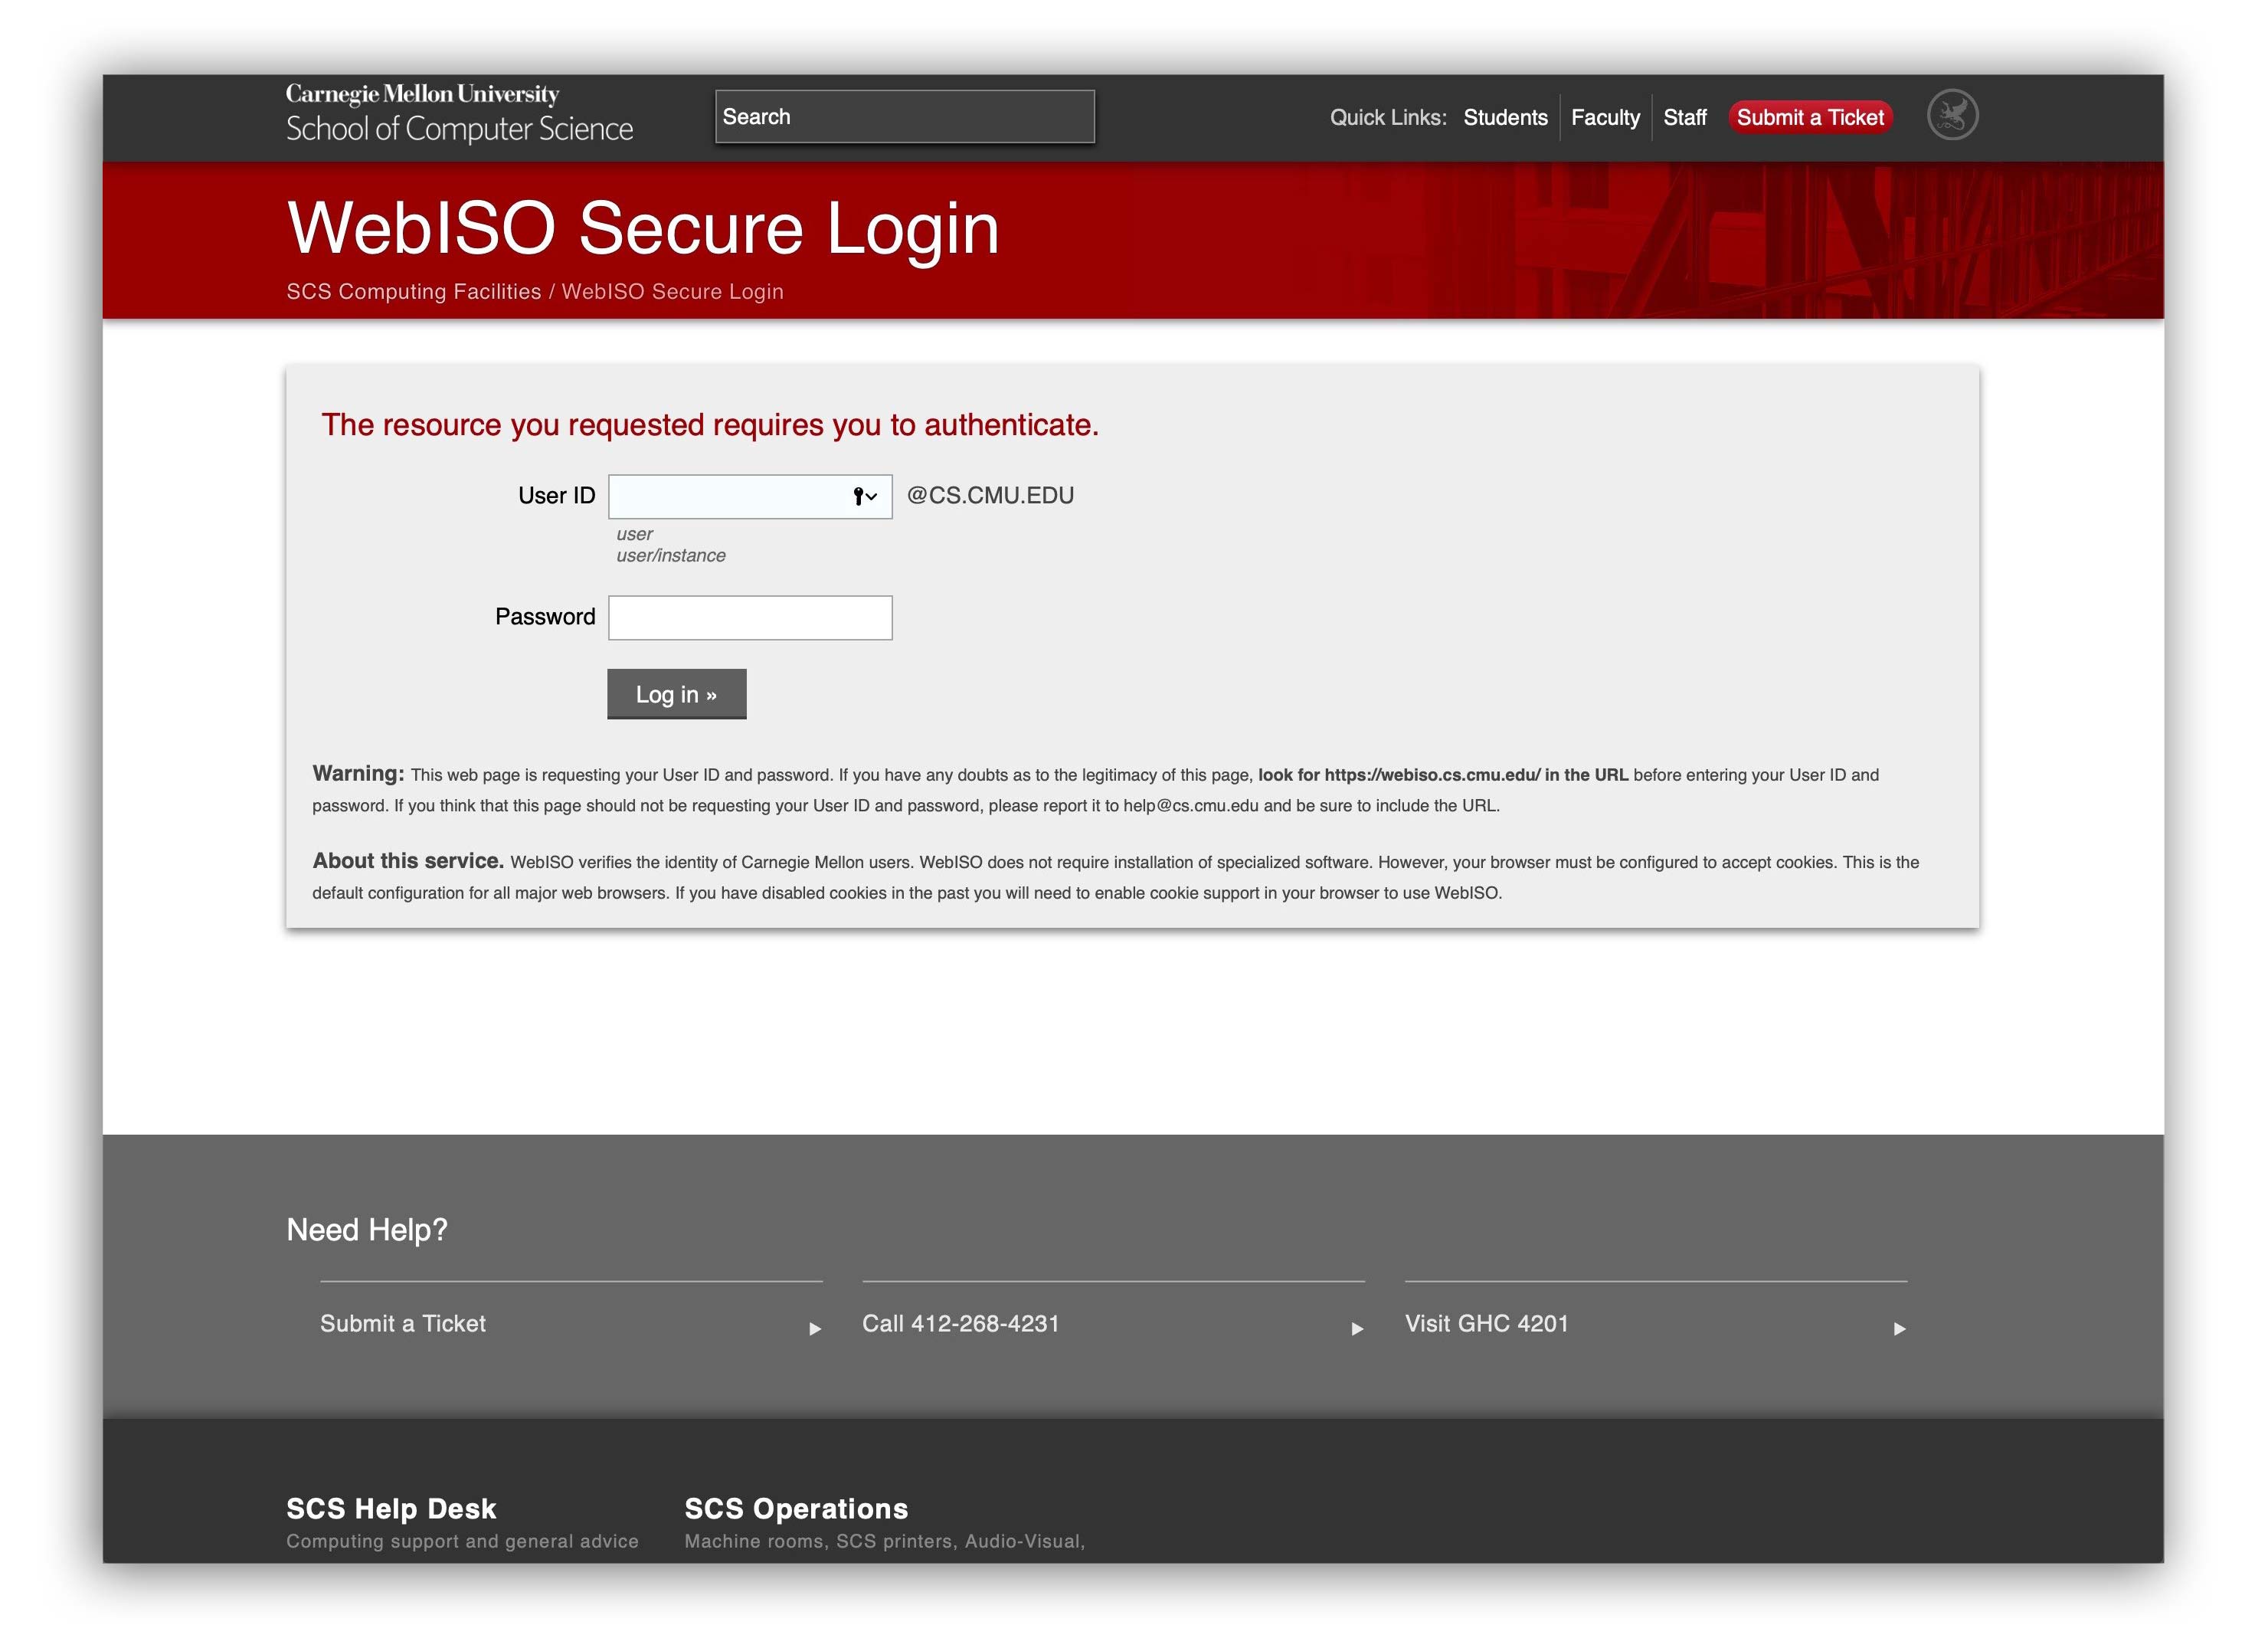 The new WebISO login appearance.